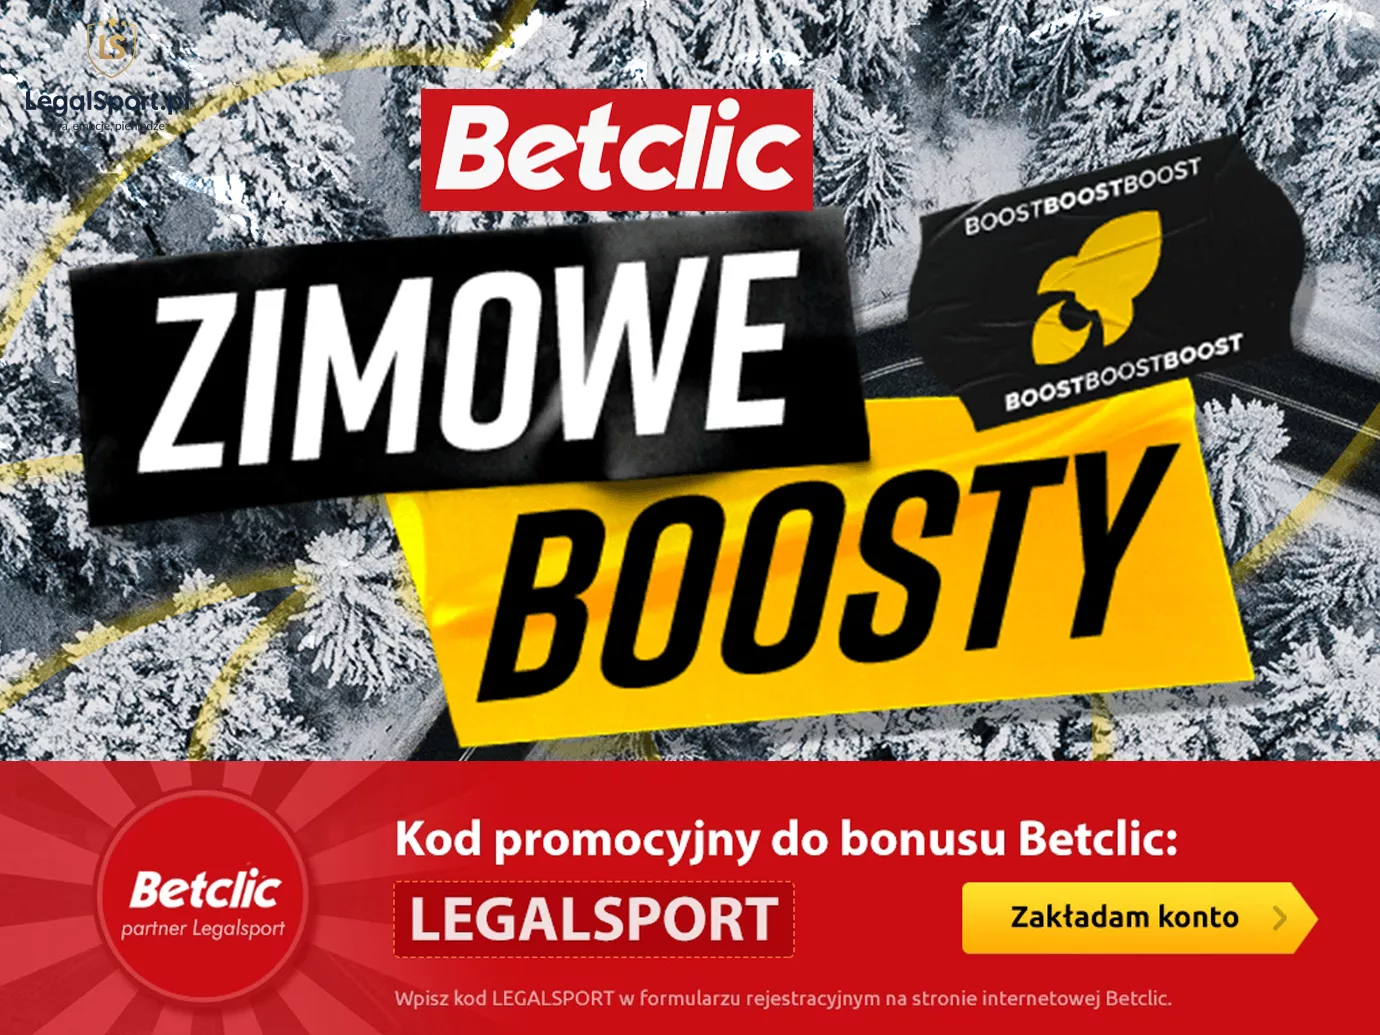 Betclic Zimowe Boosty - mega promocja kursowa na mecze LM i LE